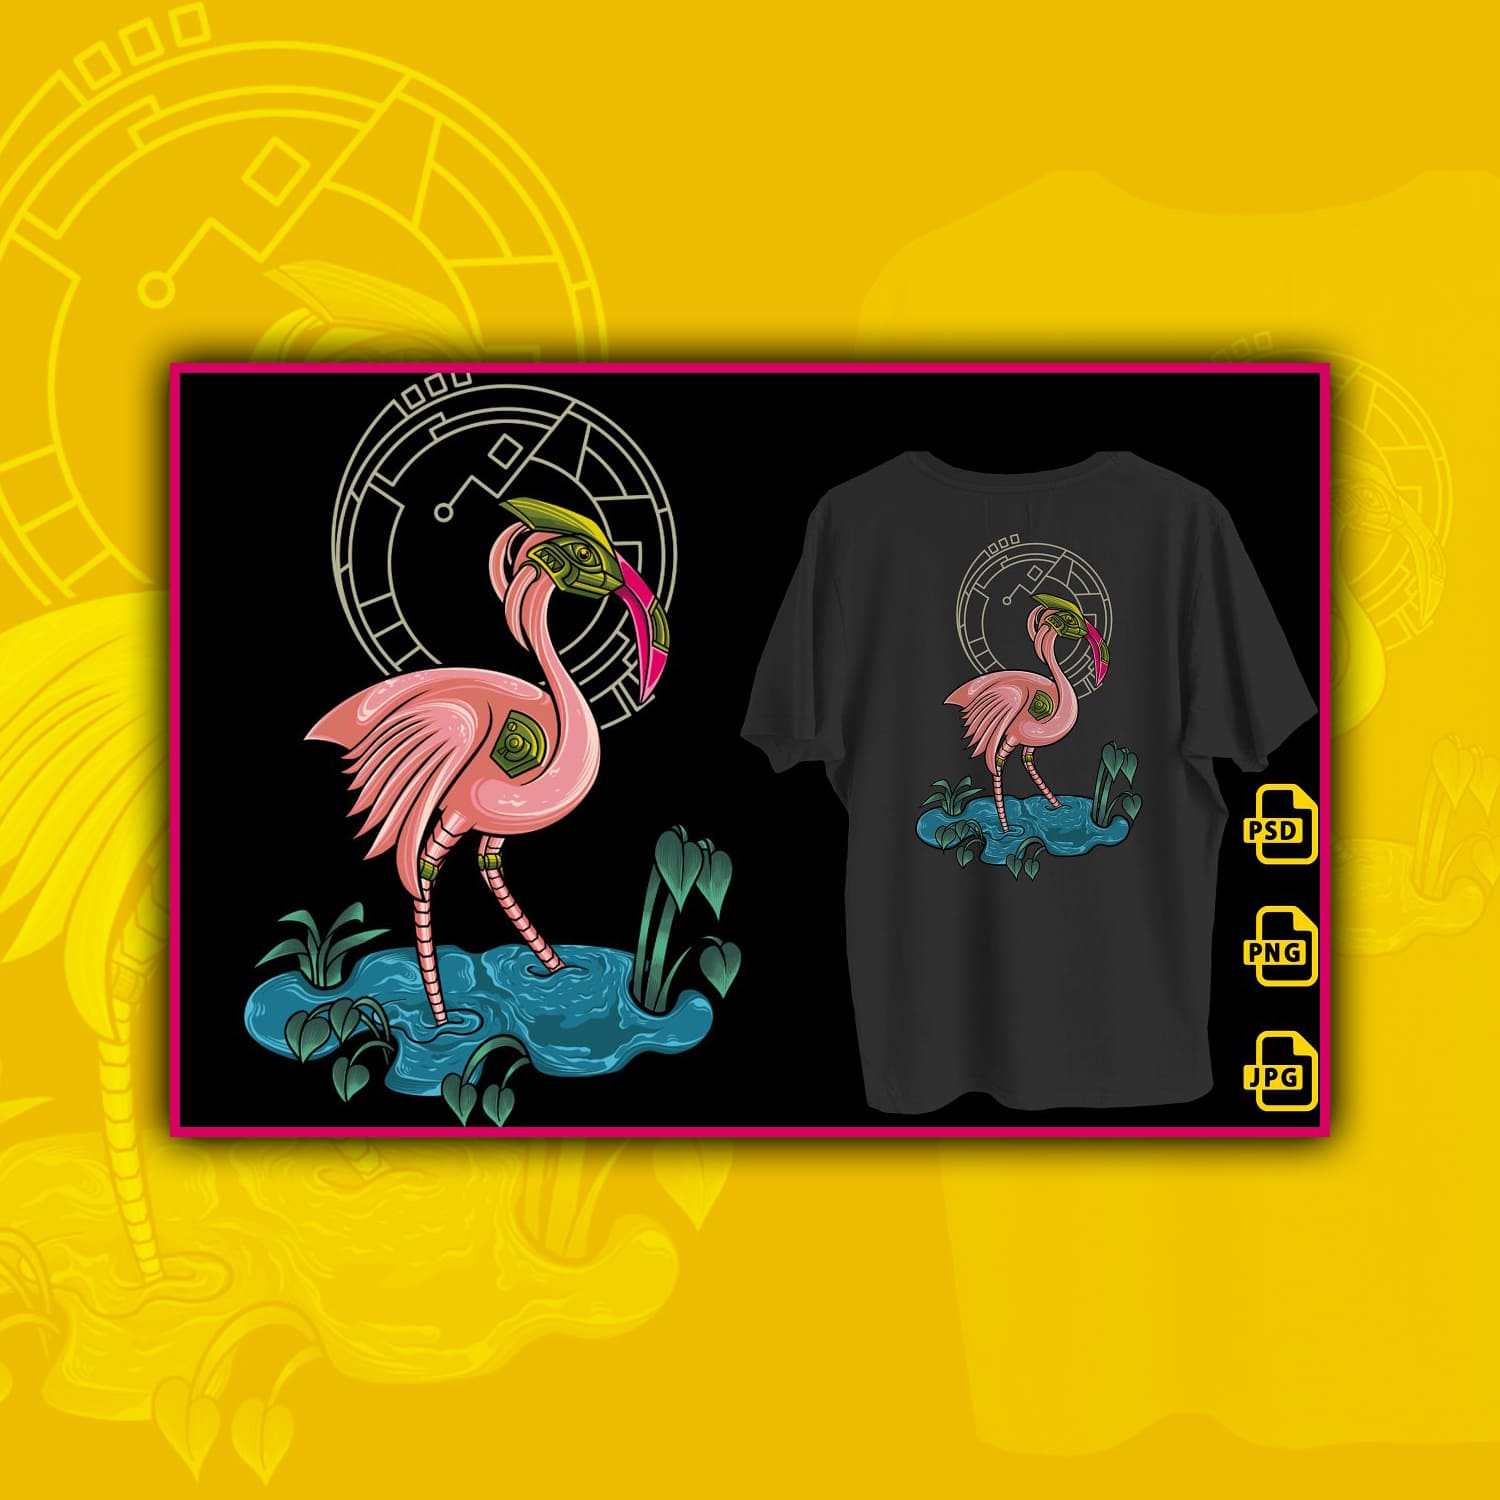 Flamingo Mecha Robot - main image preview.